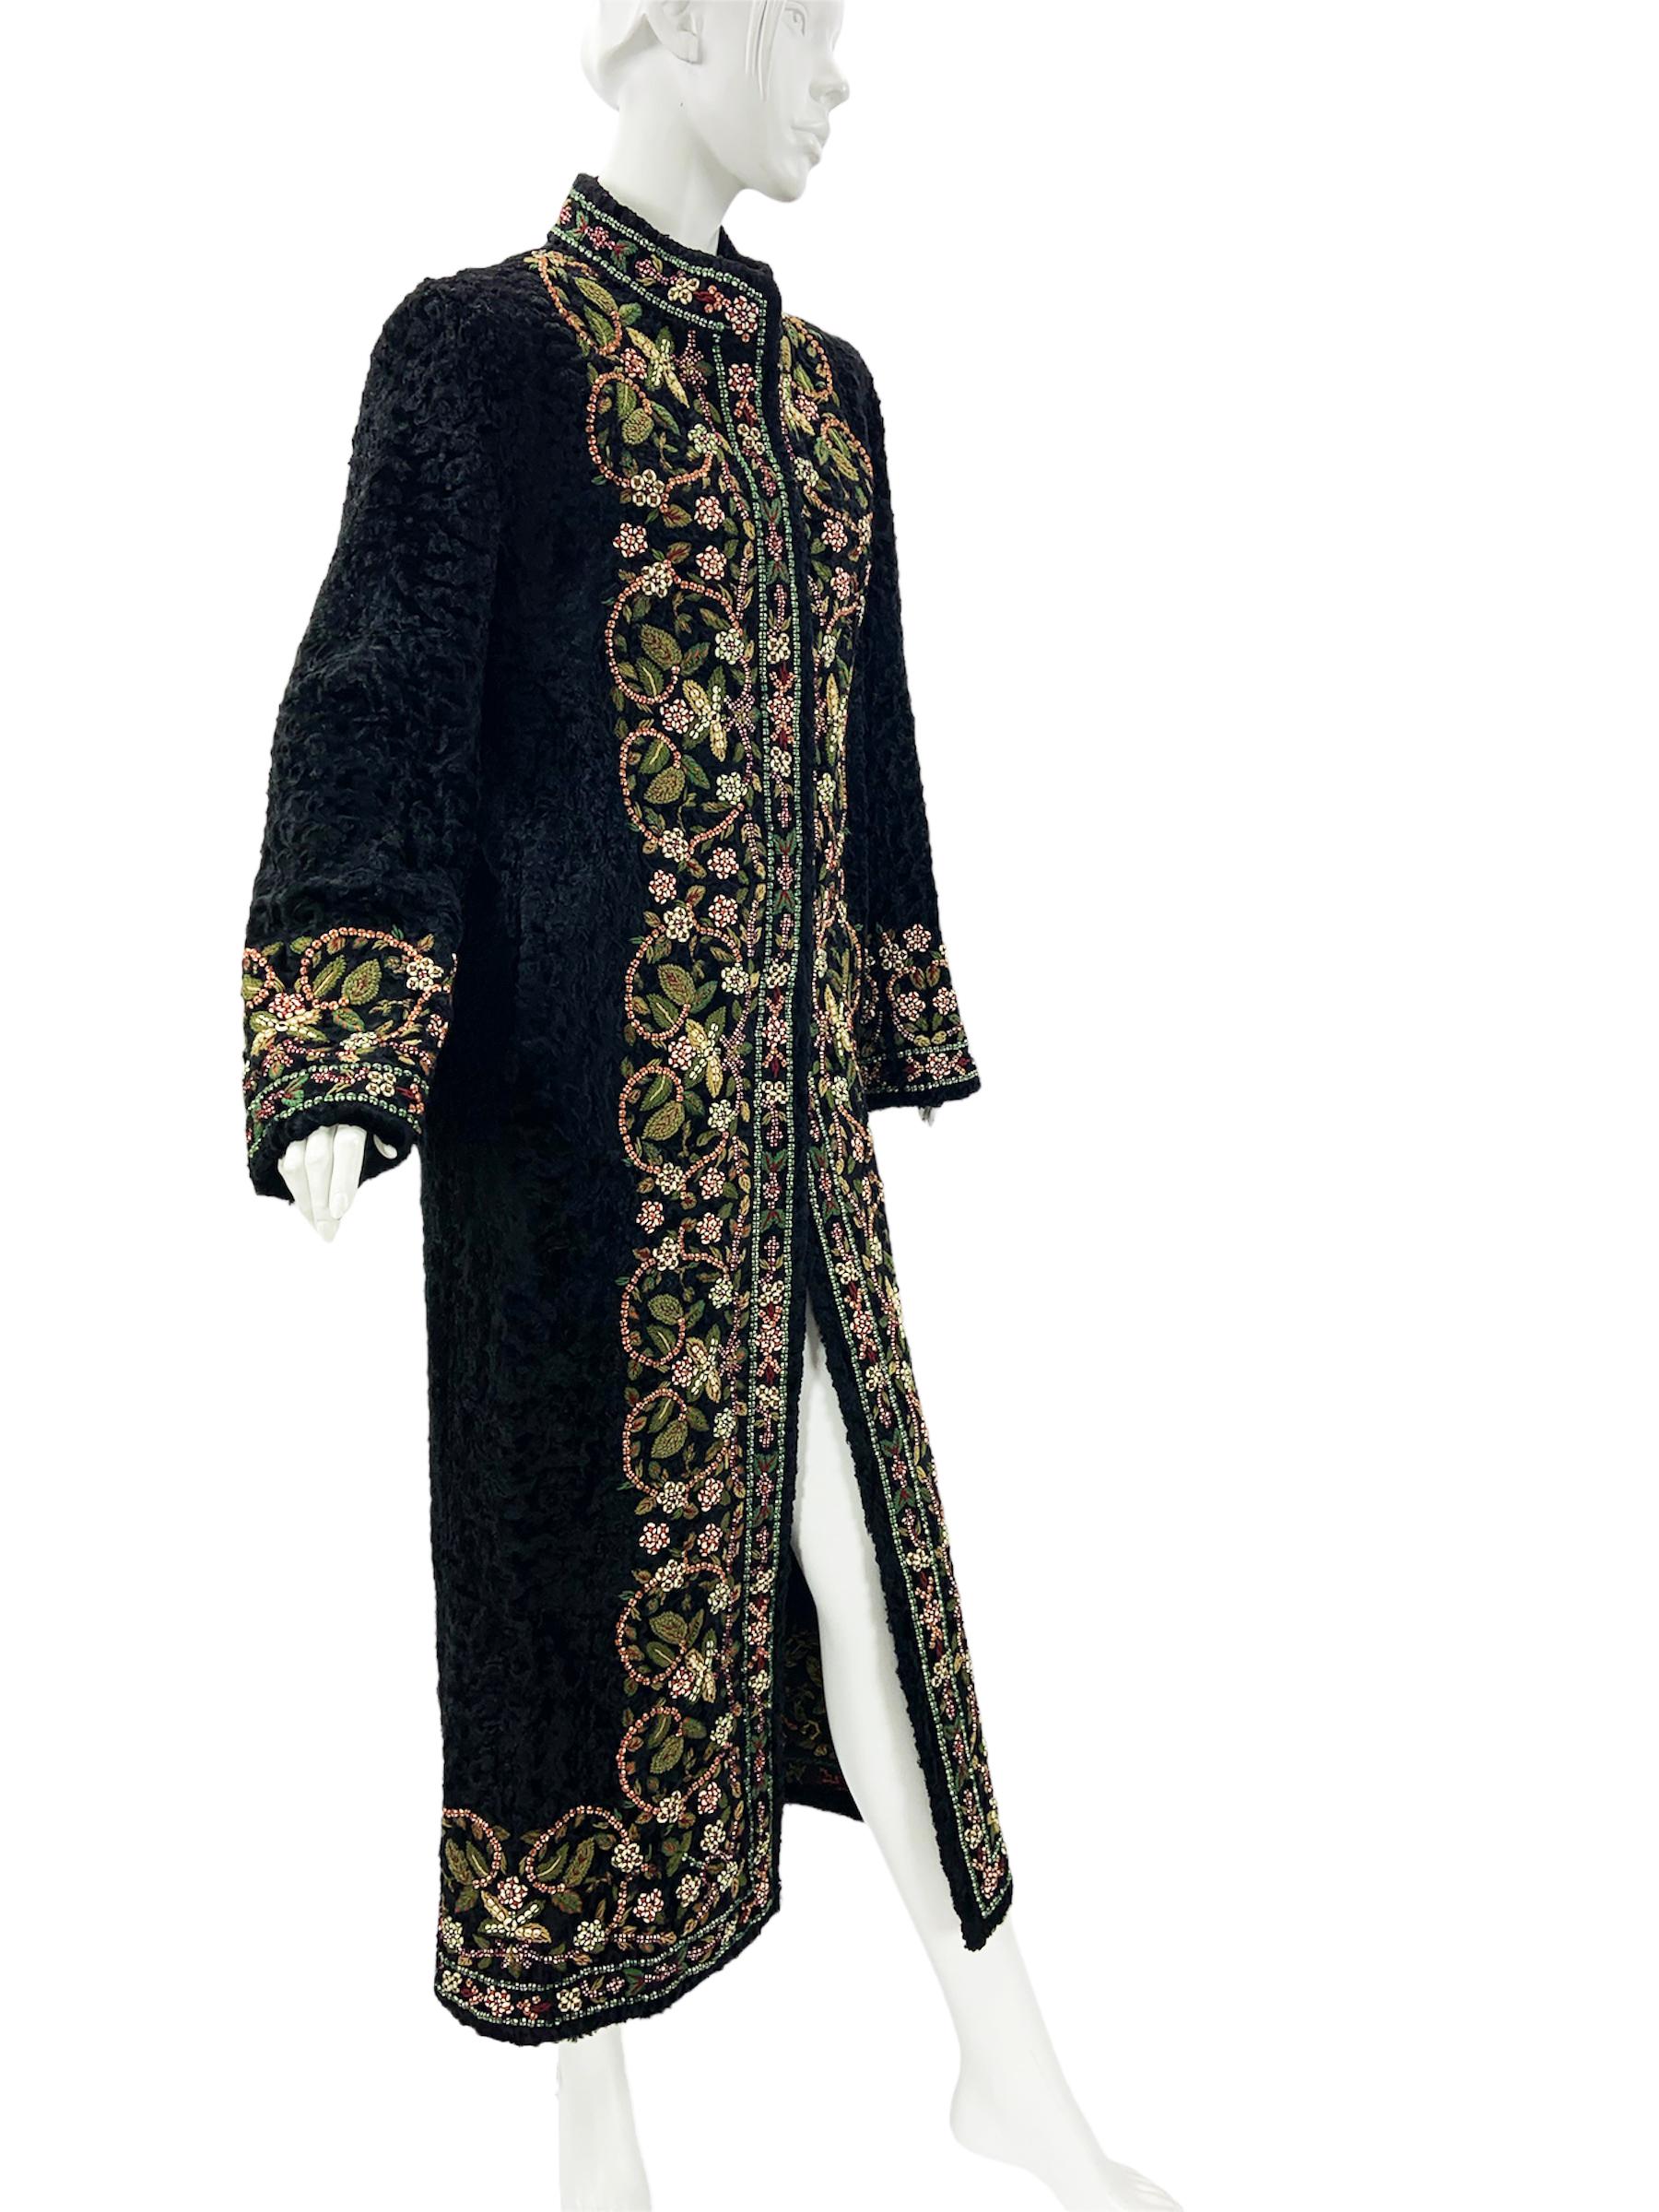 Women's Vintage Oscar de la Renta Couture FW 2002 Broadtail Lamb Beaded Embroidered Coat For Sale